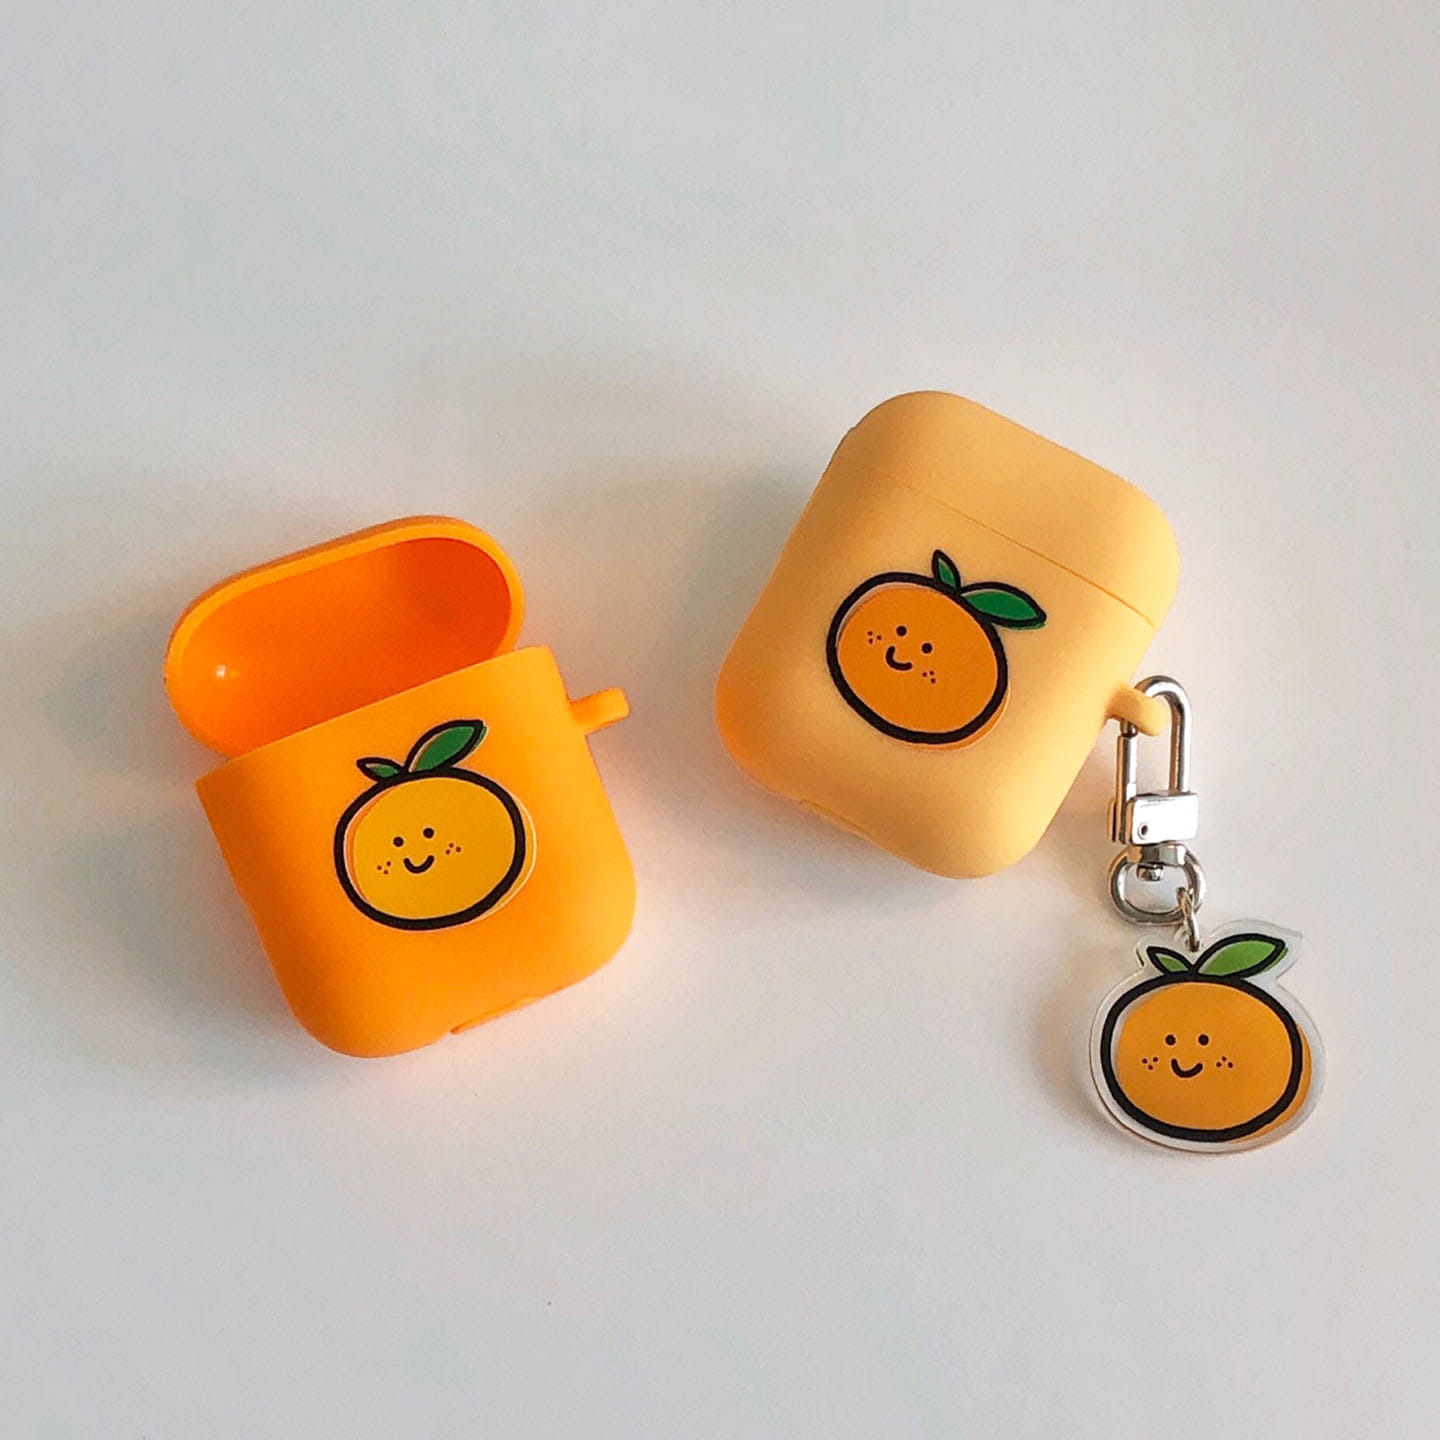 Tangerine air pods case (jelly)